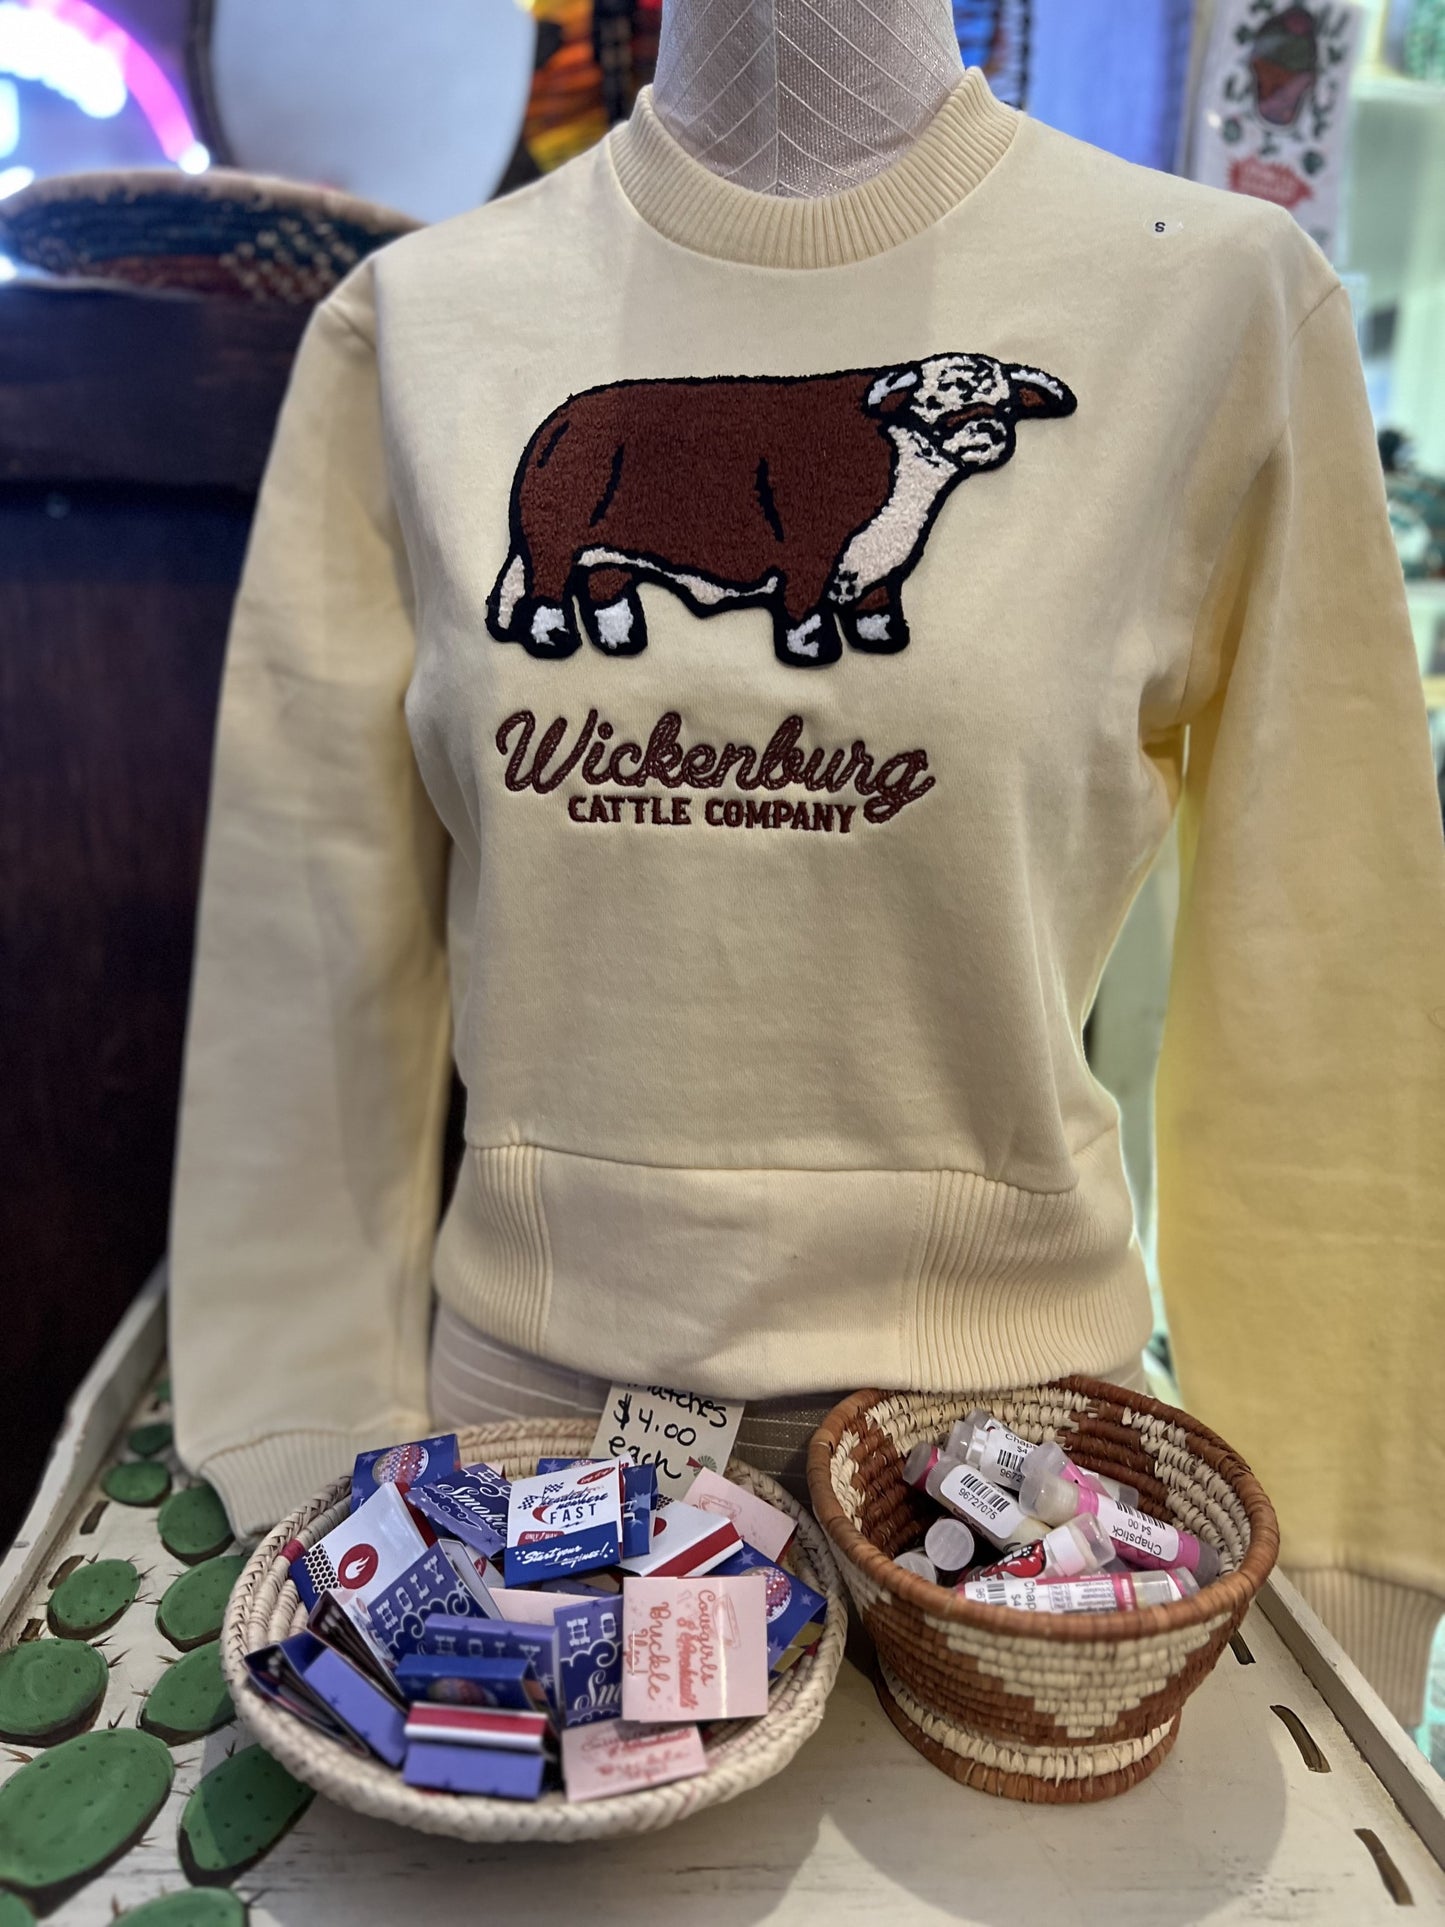 Wickenburg Cattle Company Sweater